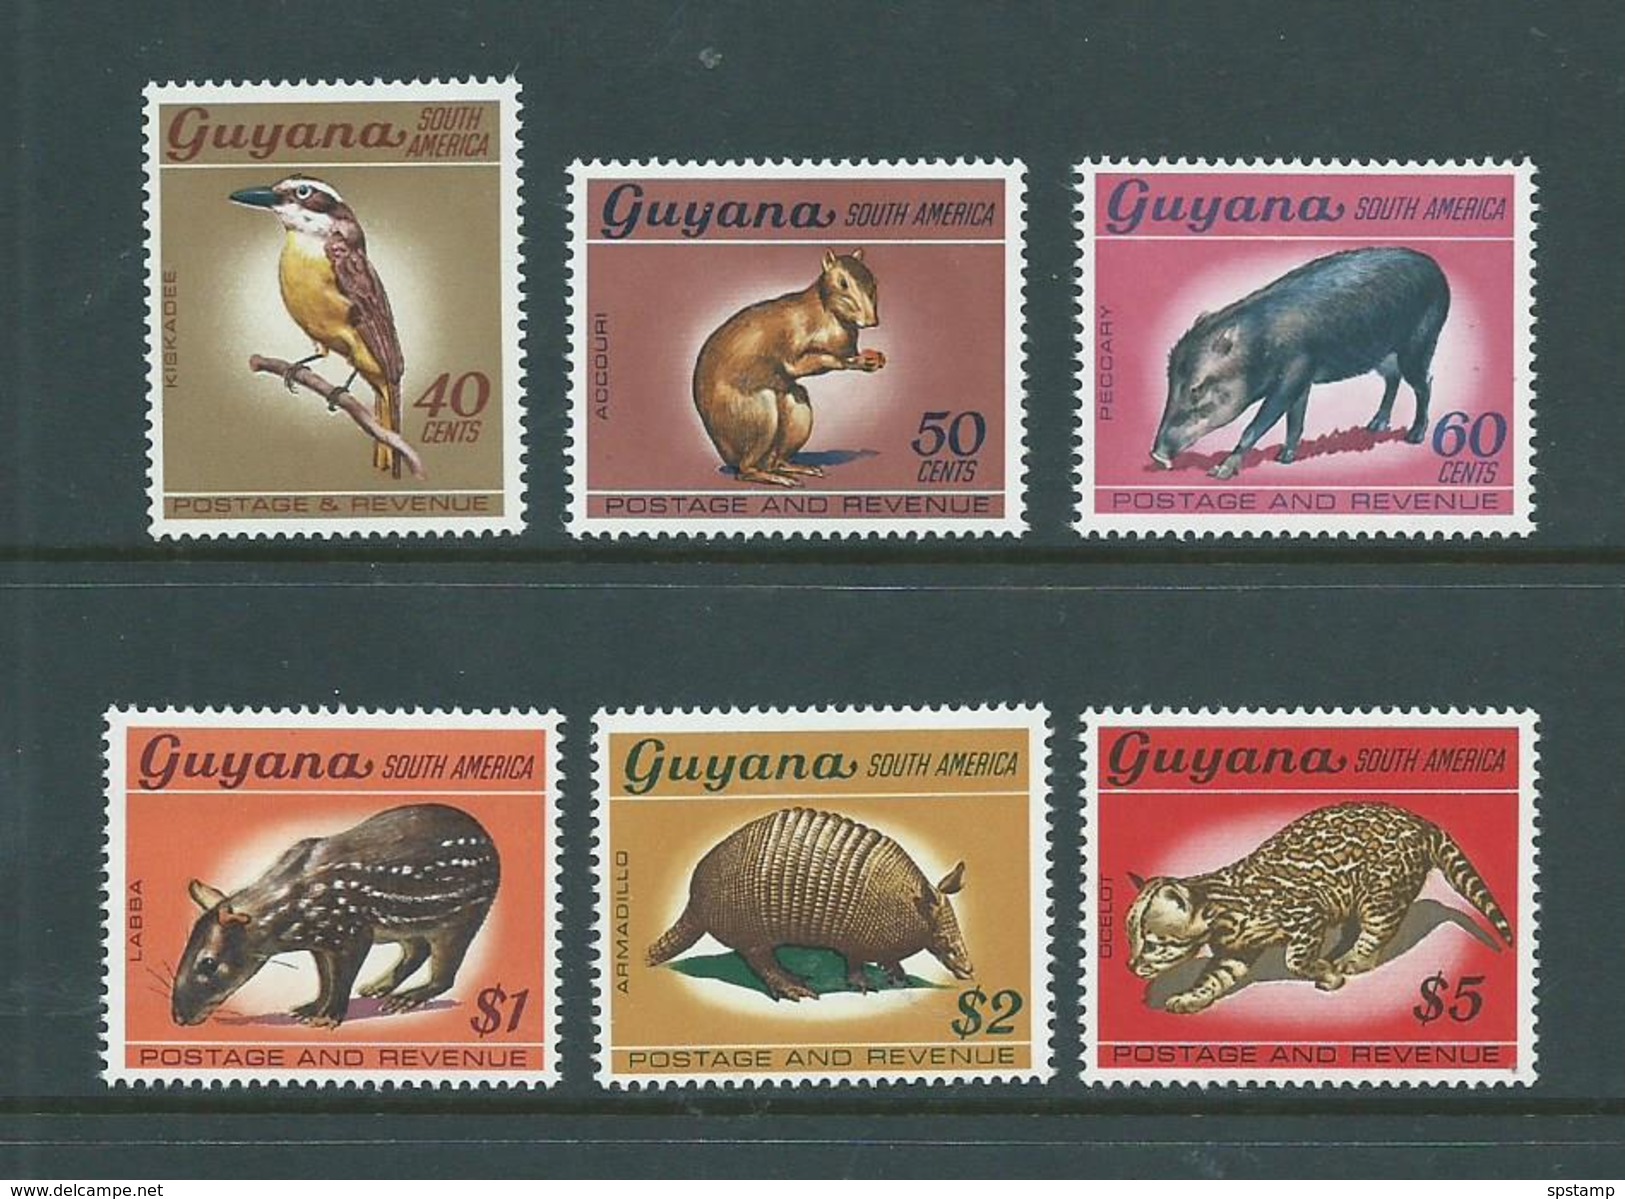 Guyana 1968 Fauna Definitives 6 Values To $5 MNH - Guyana (1966-...)